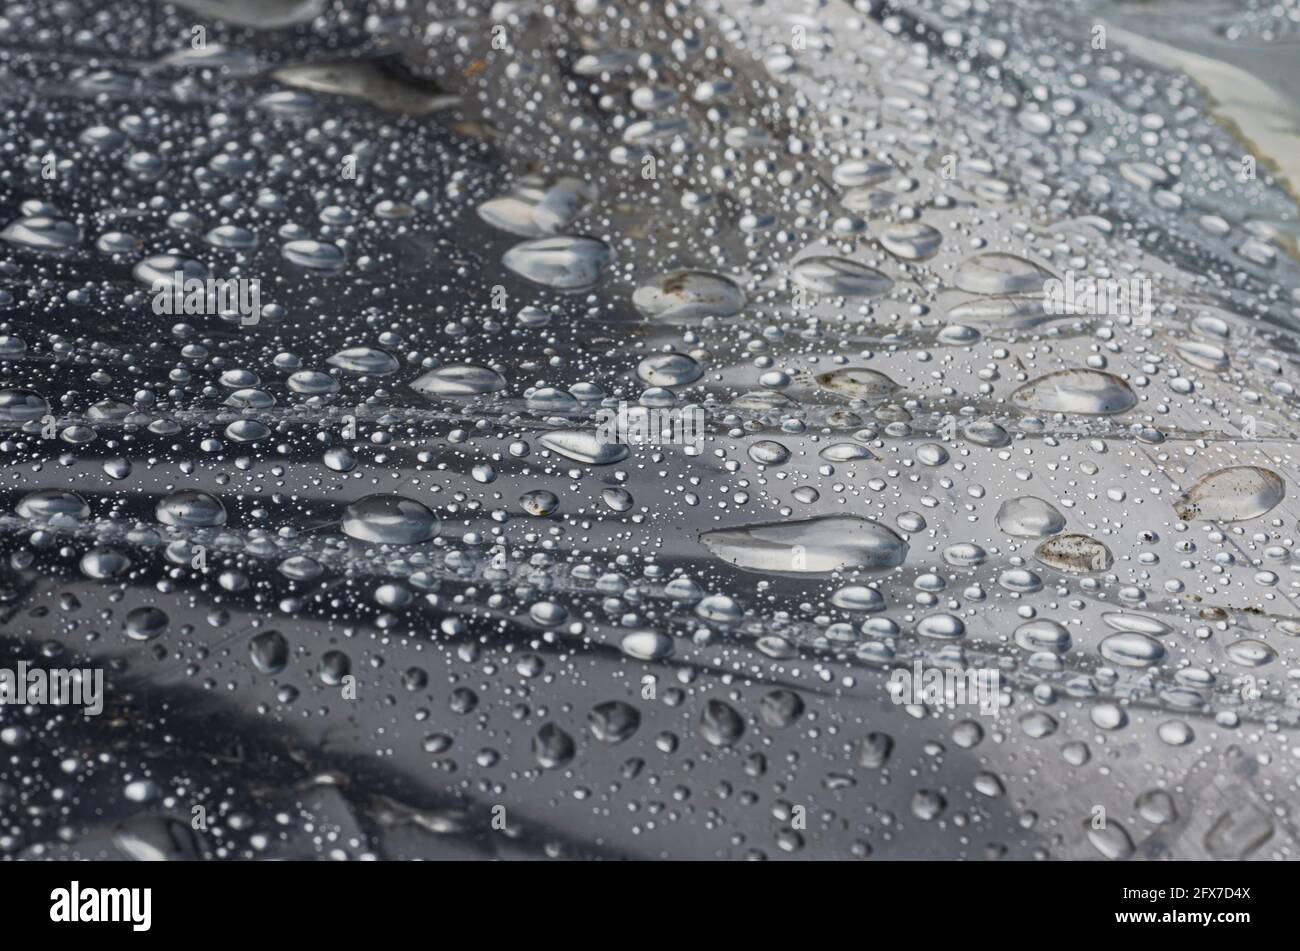 Shiny surface of polyethylene after rain close-up Stock Photo